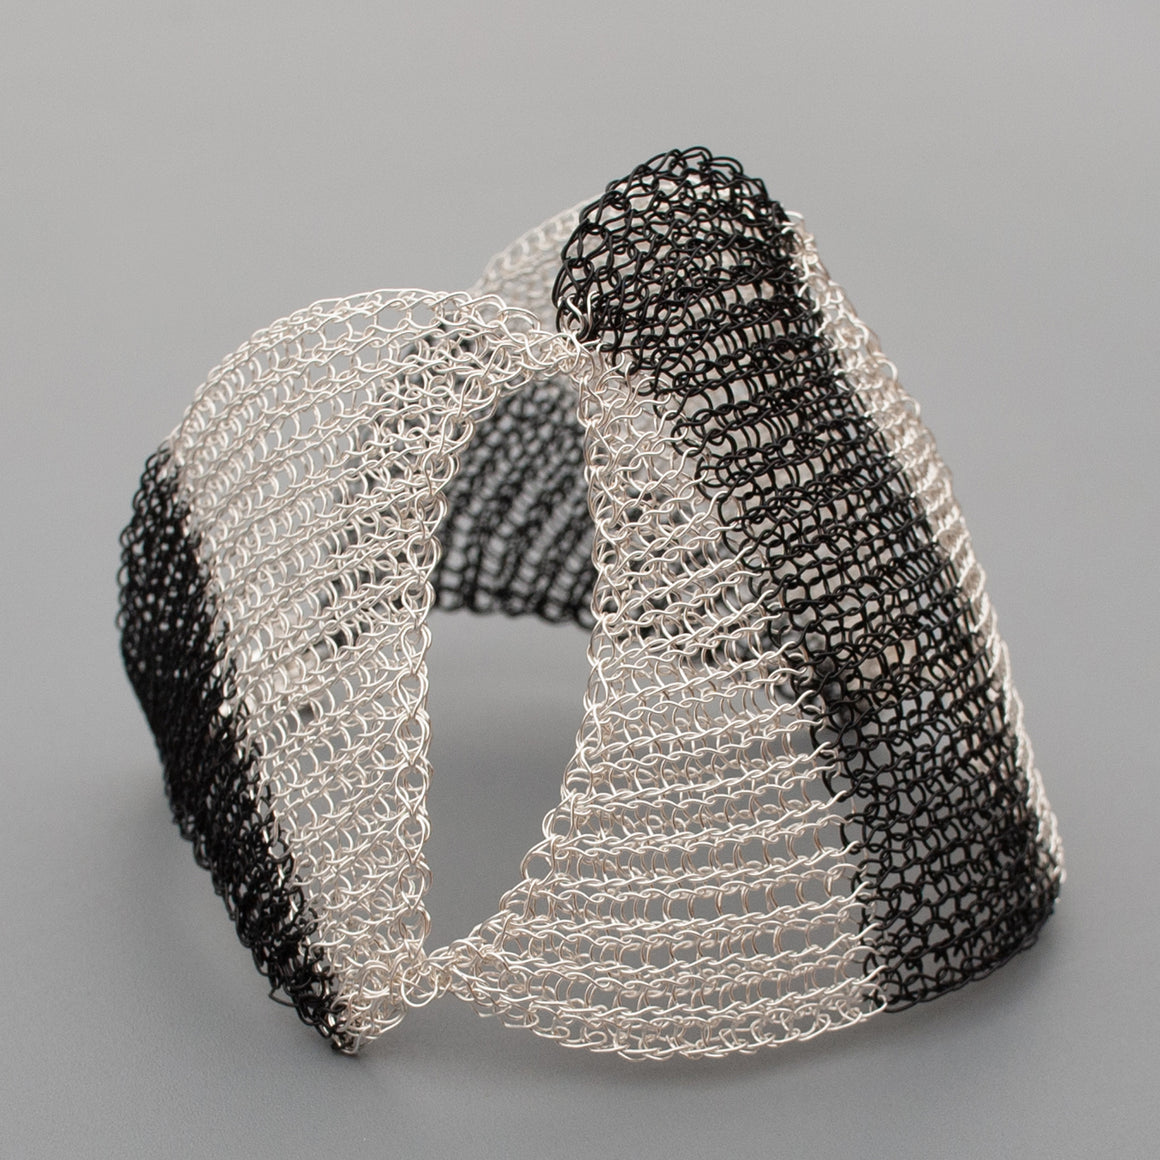 SHOGUN Bracelet, Contemporary wire crochet cuff, Black and White - Yooladesign